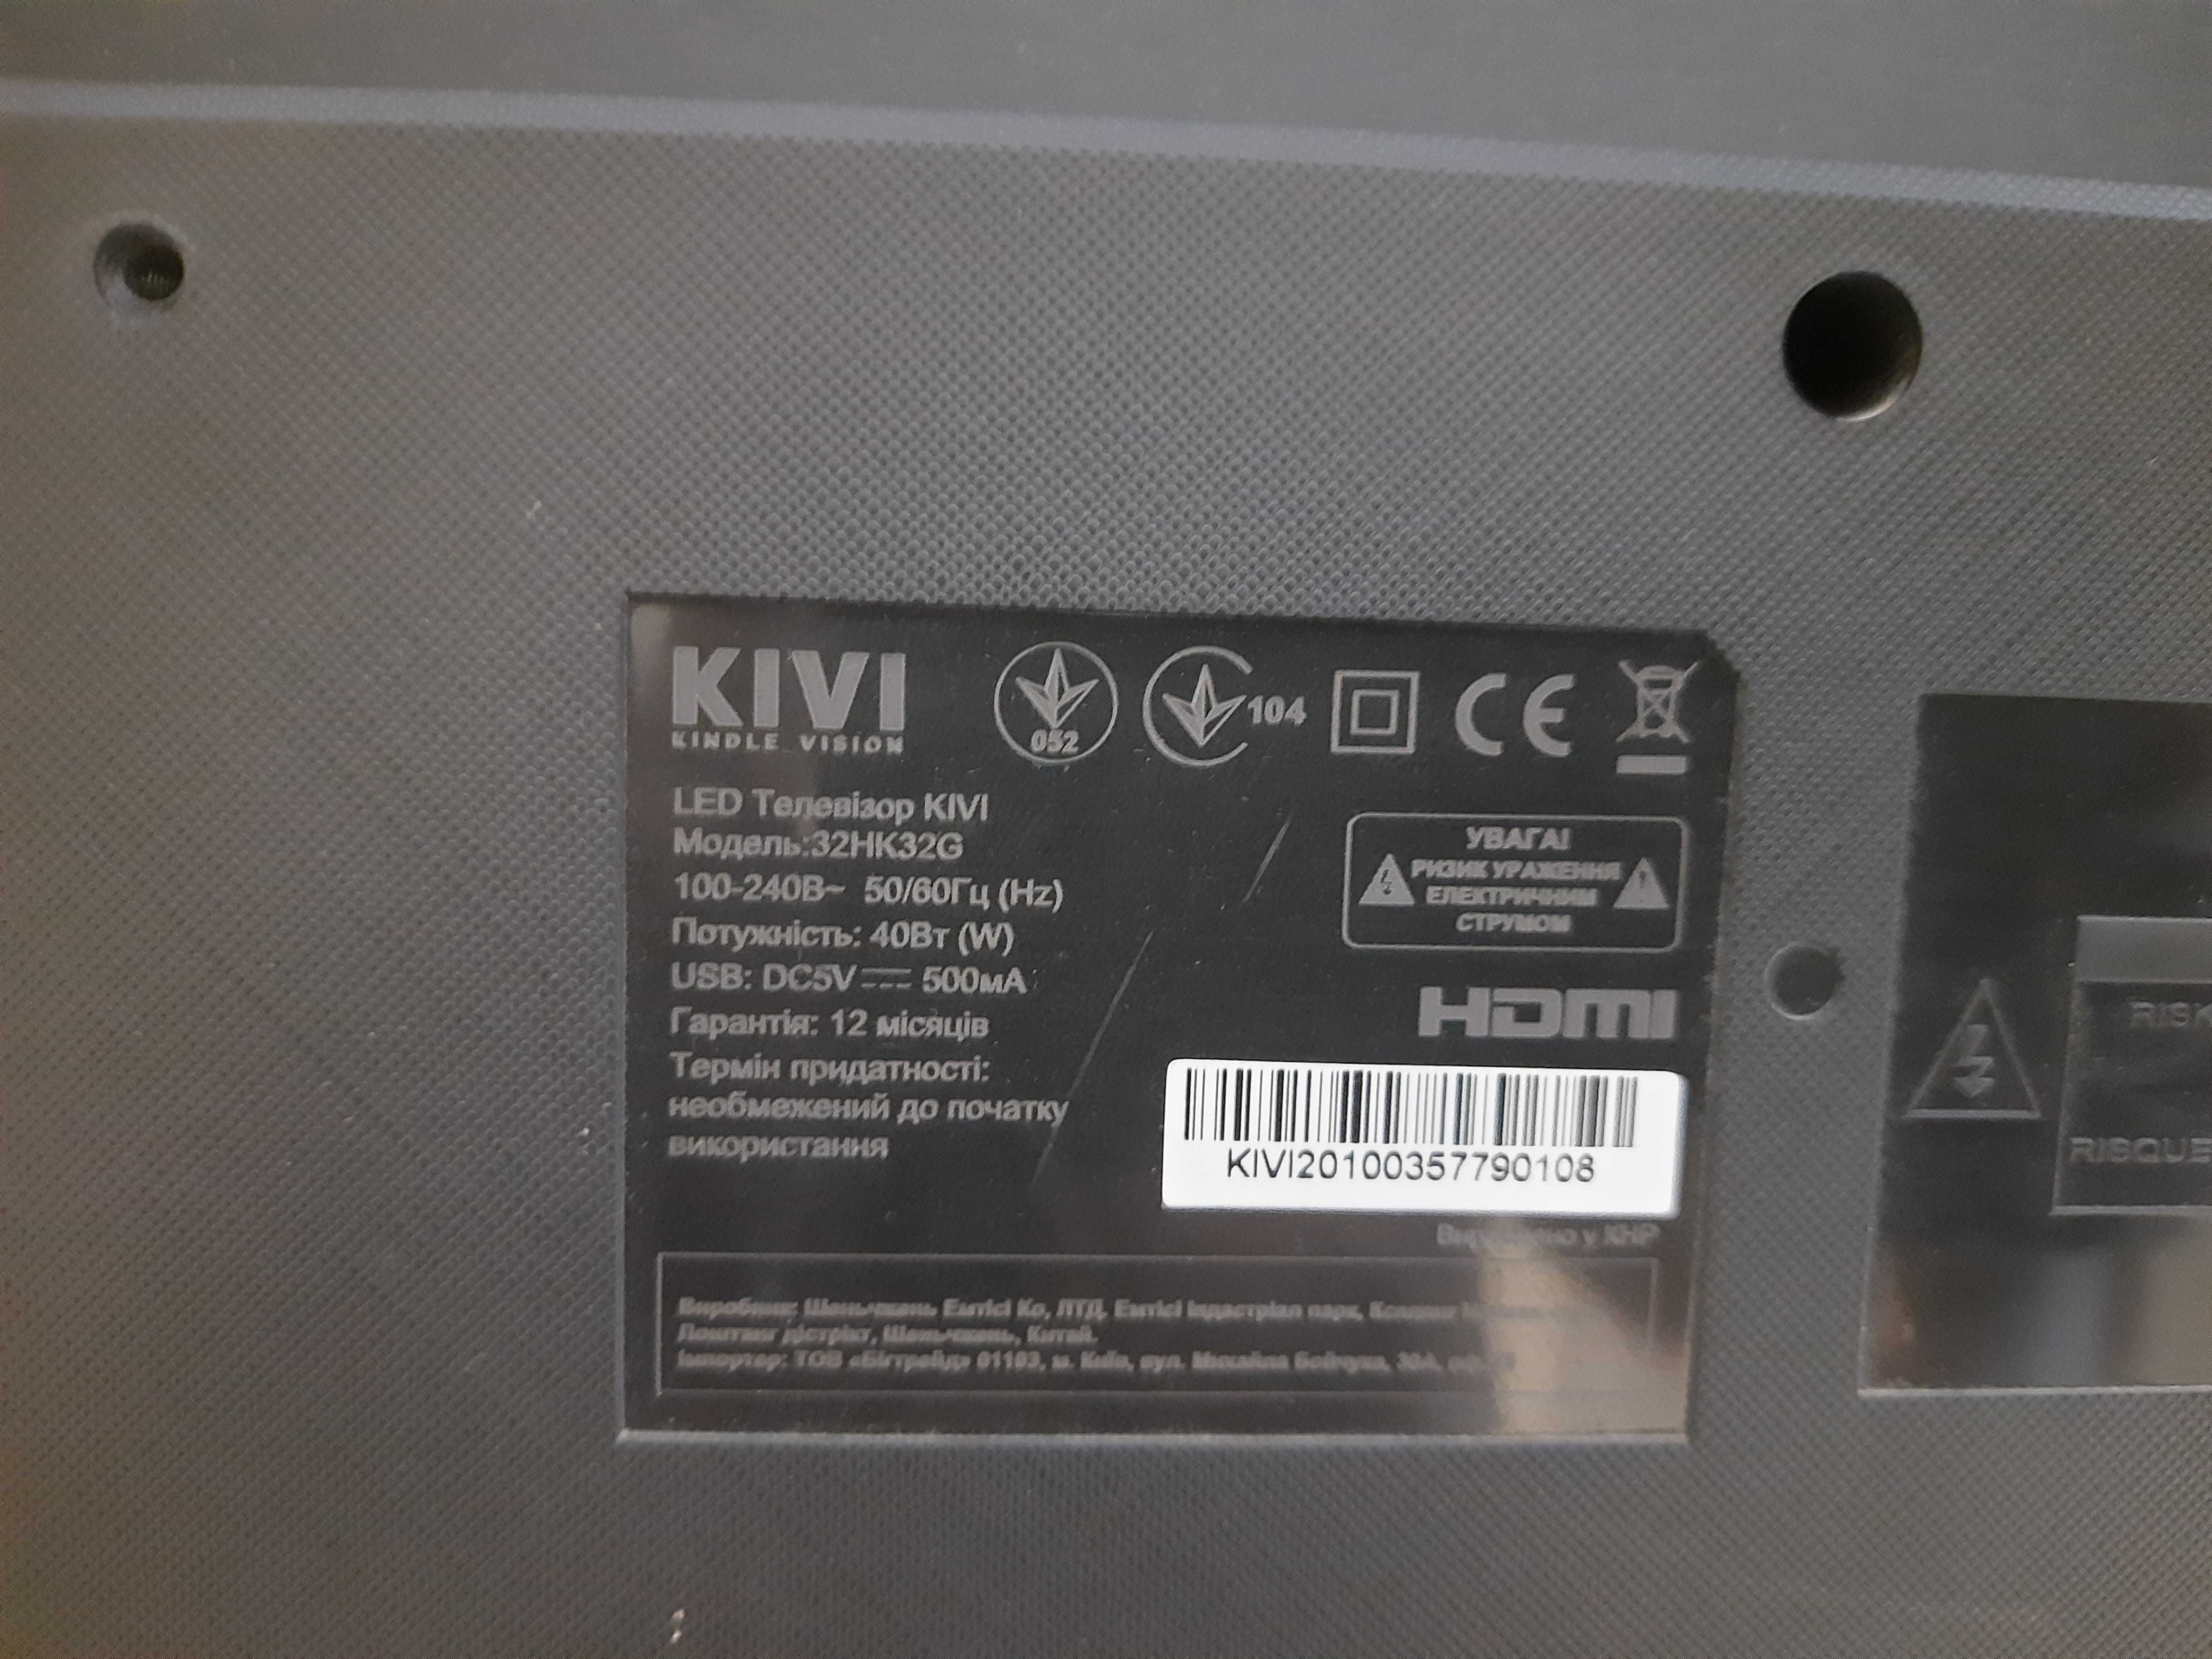 Продам смарт телевизор KIVI 32 под ремонт или на запчасти.